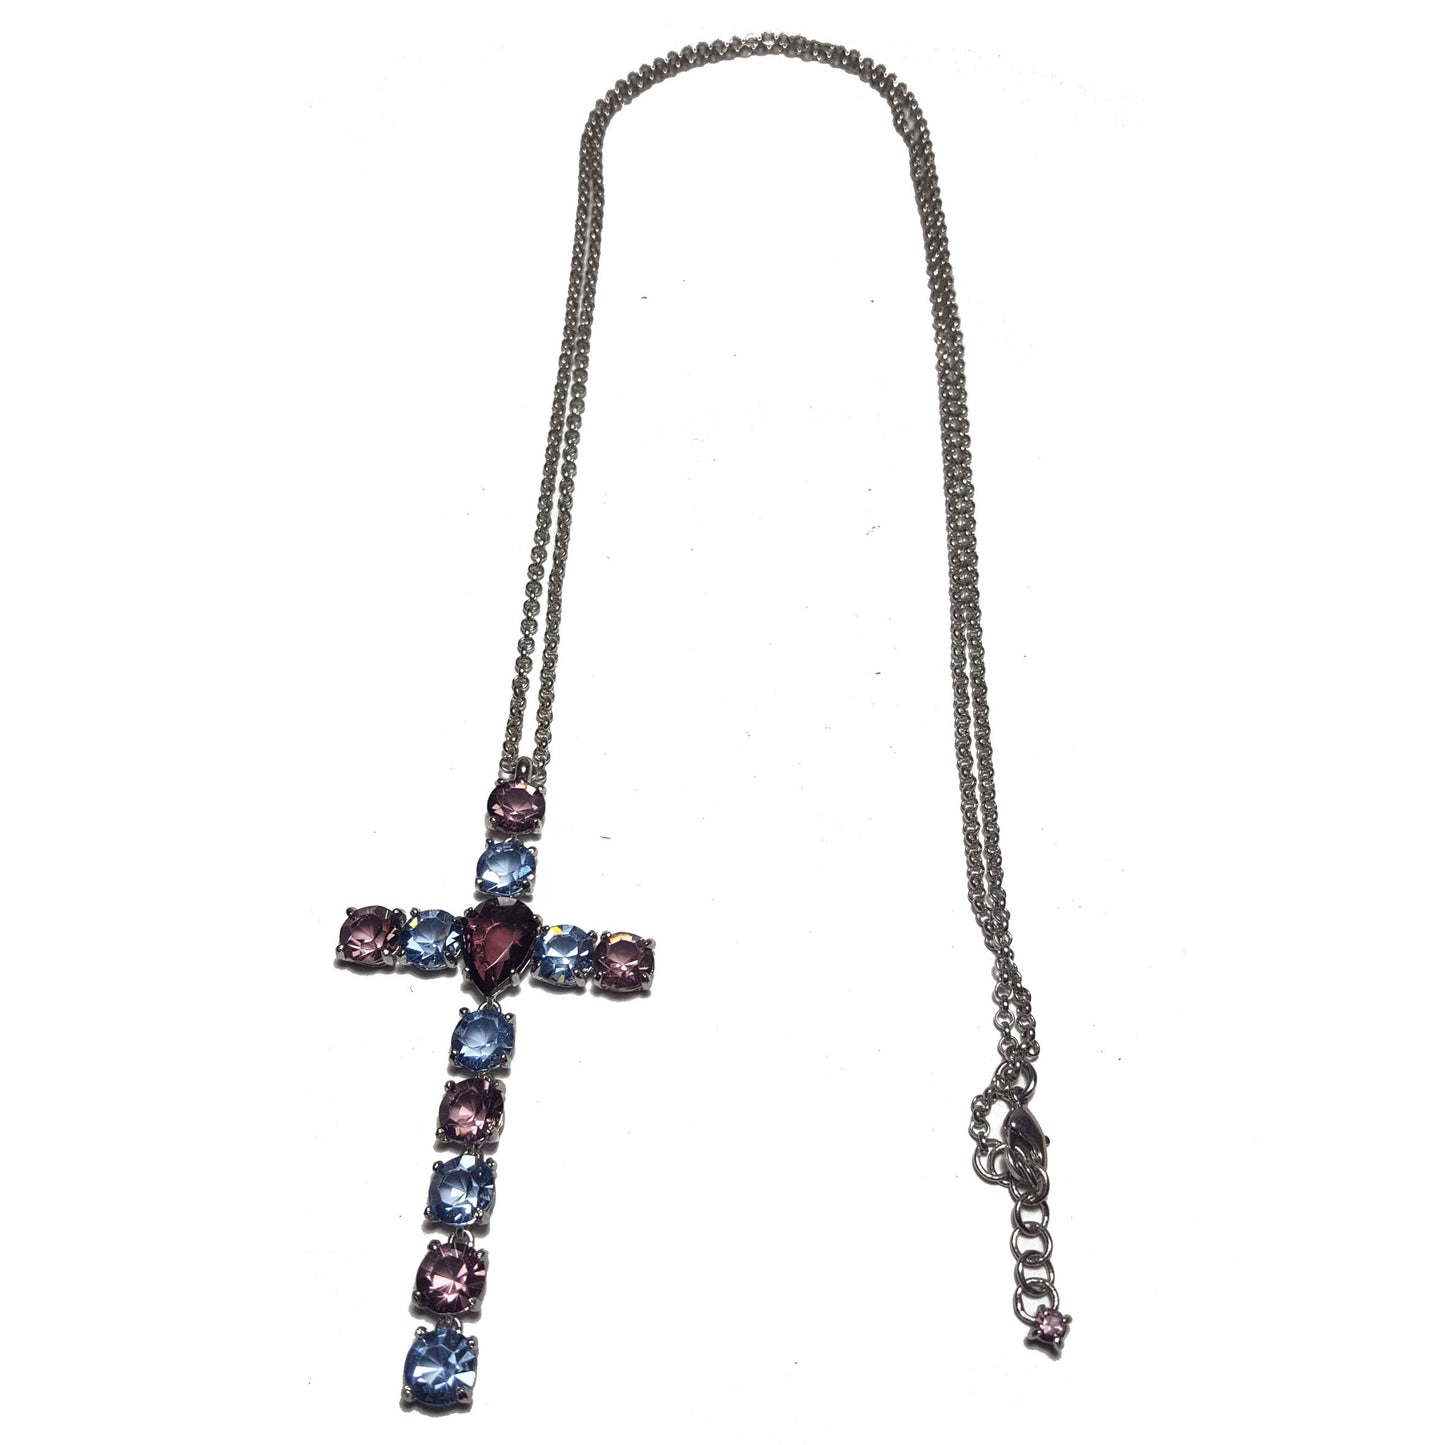 DIANA small cross Swarovski stone brass necklace #MS104CL - MARIA SALVADOR